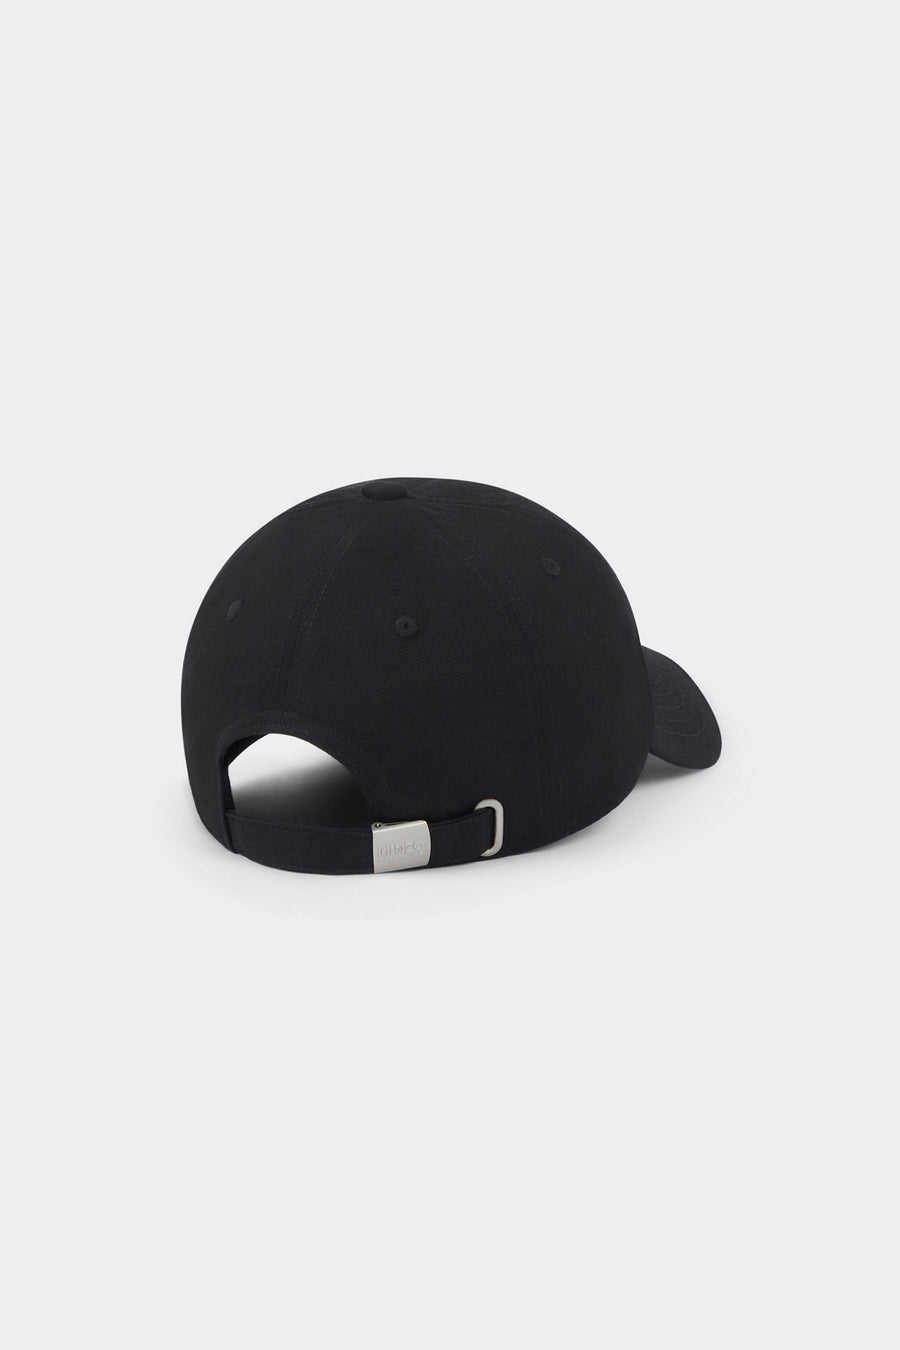 KENZO  CAP(BLACK)